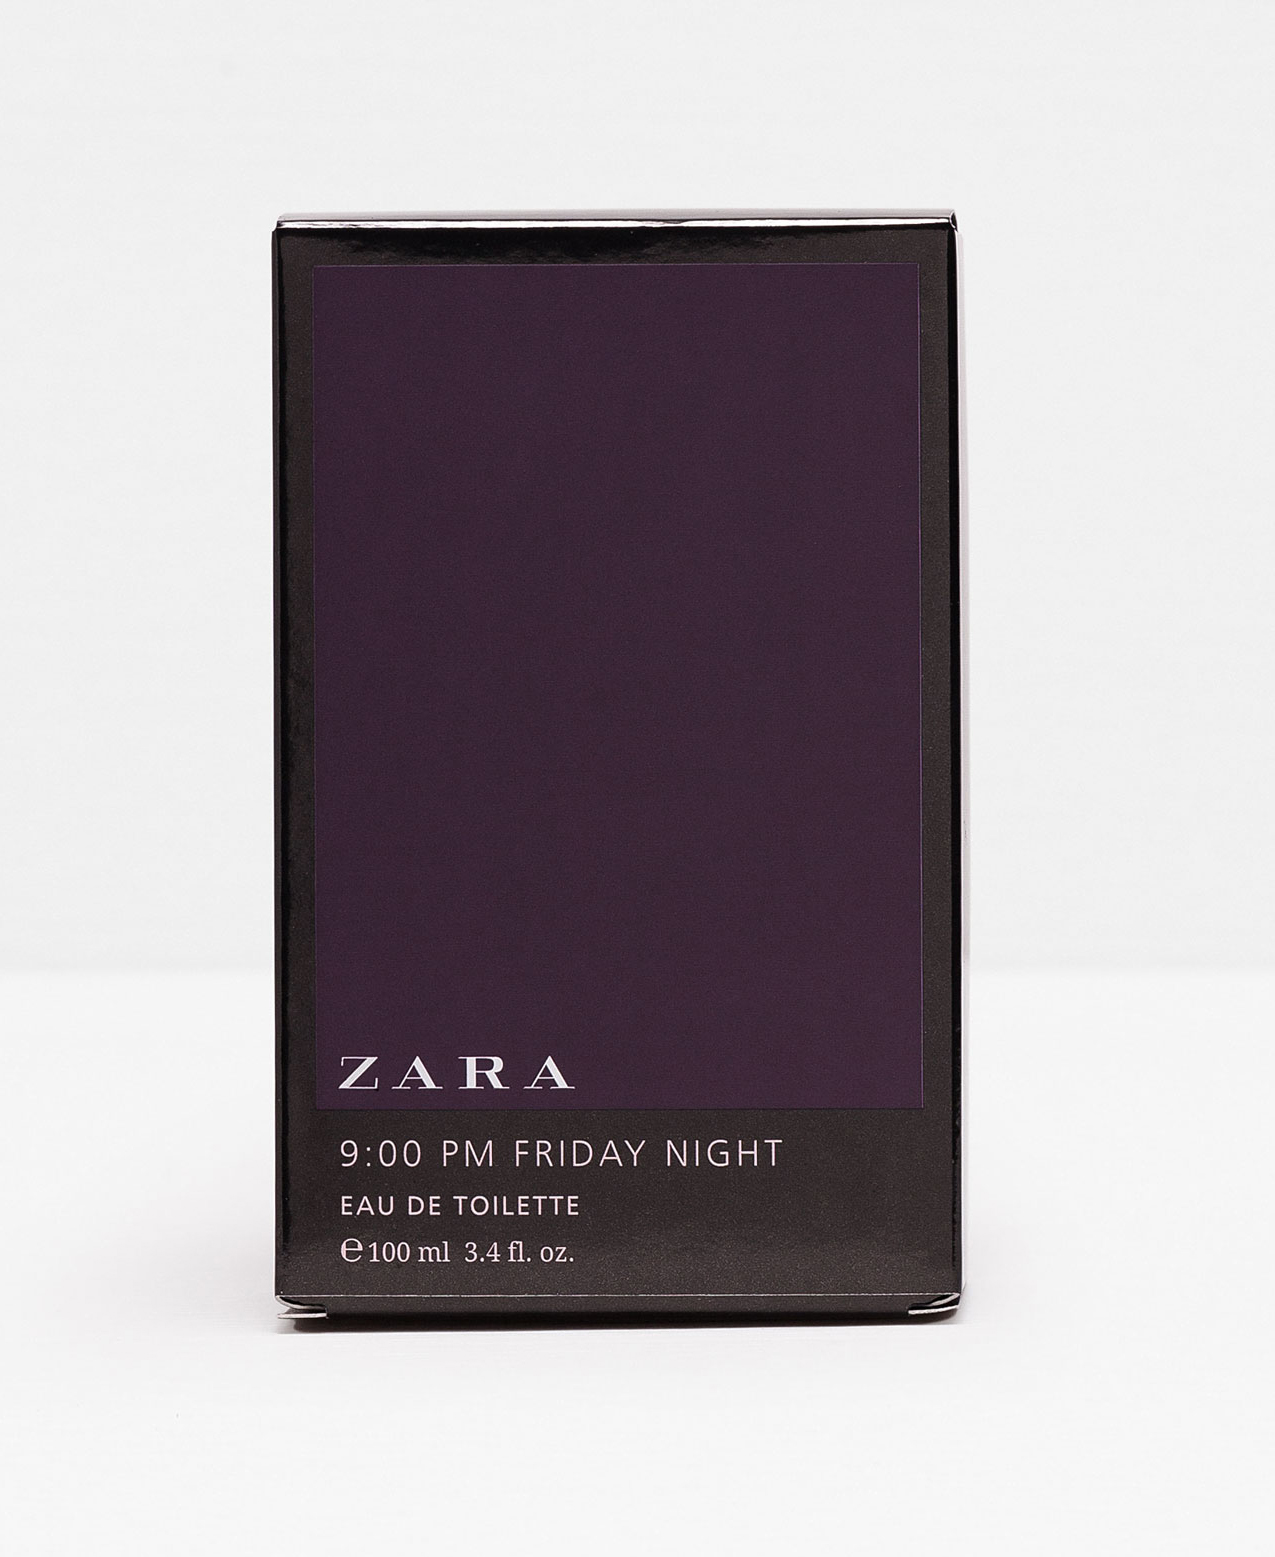 zara friday night perfume